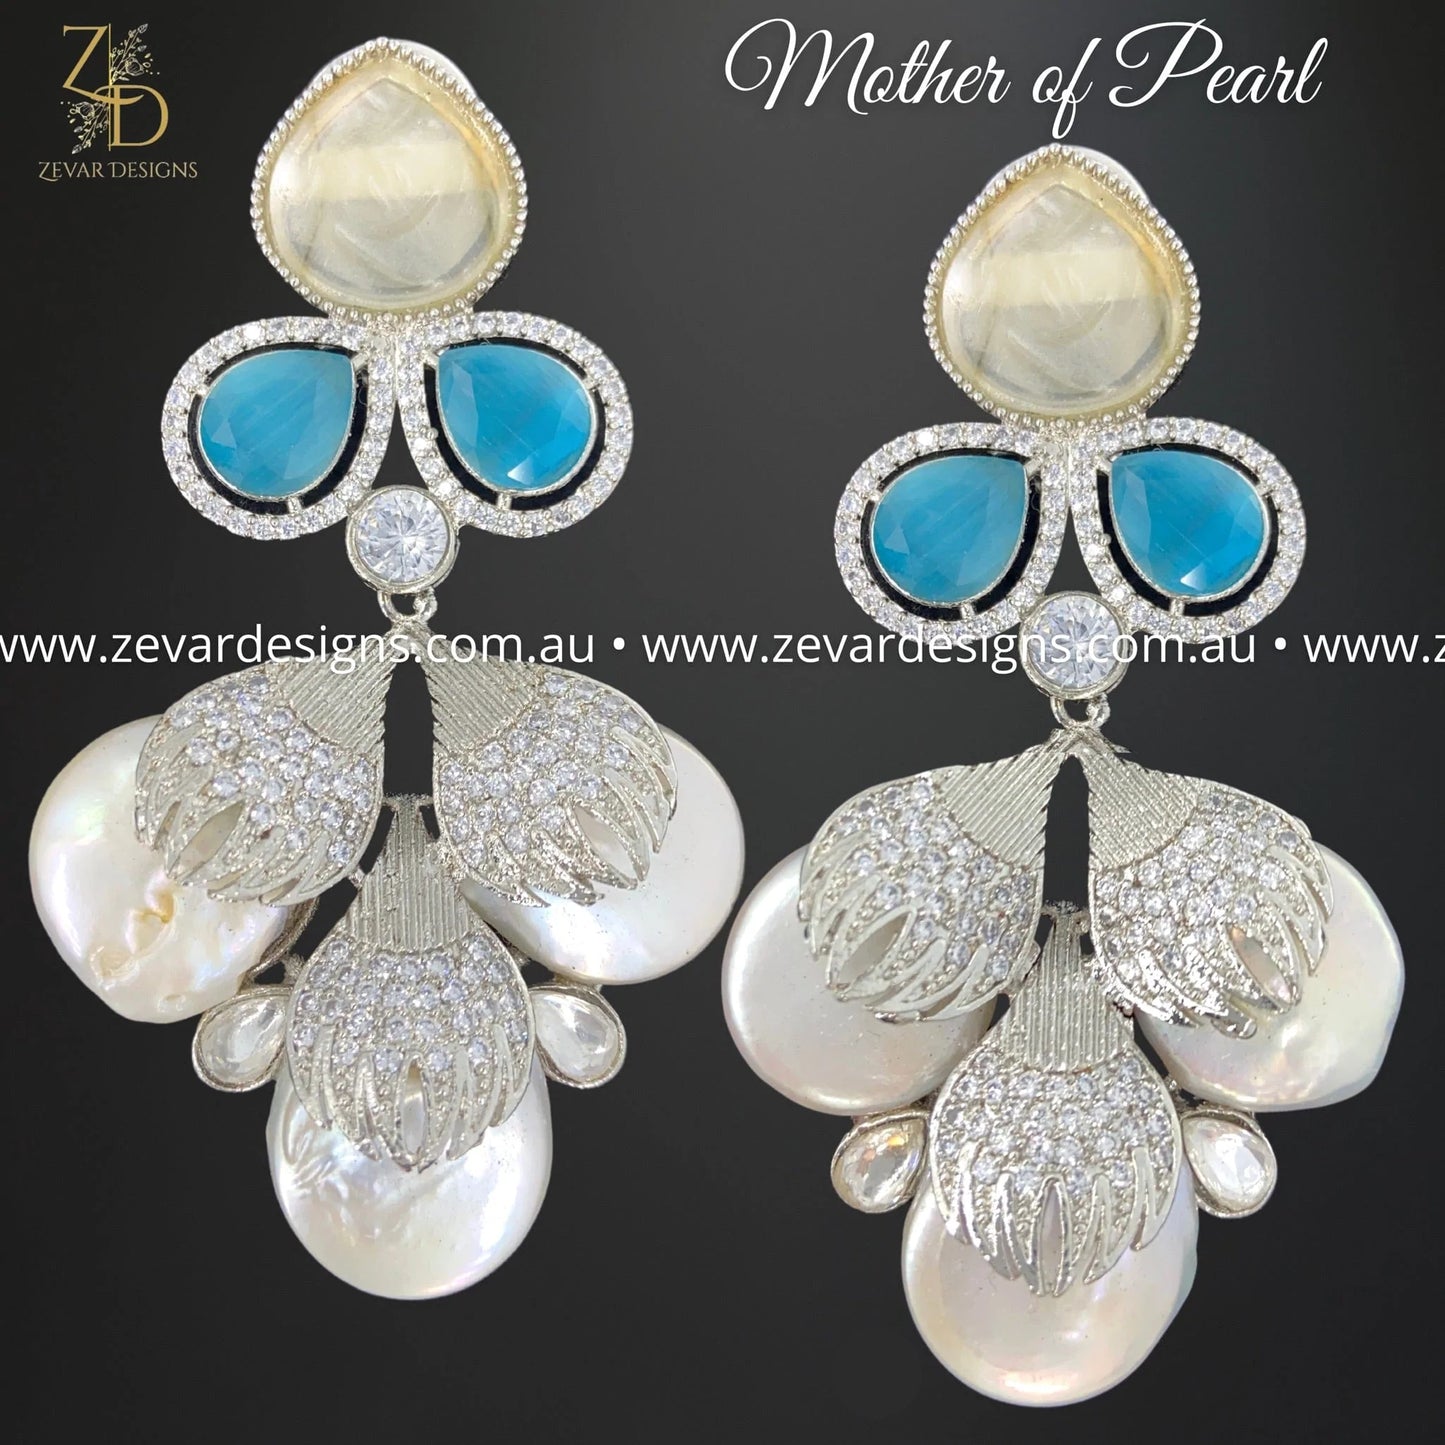 Zevar Designs Fusion-Amrapali Kundan AD Earrings with Mother of Pearl - Aqua Blue